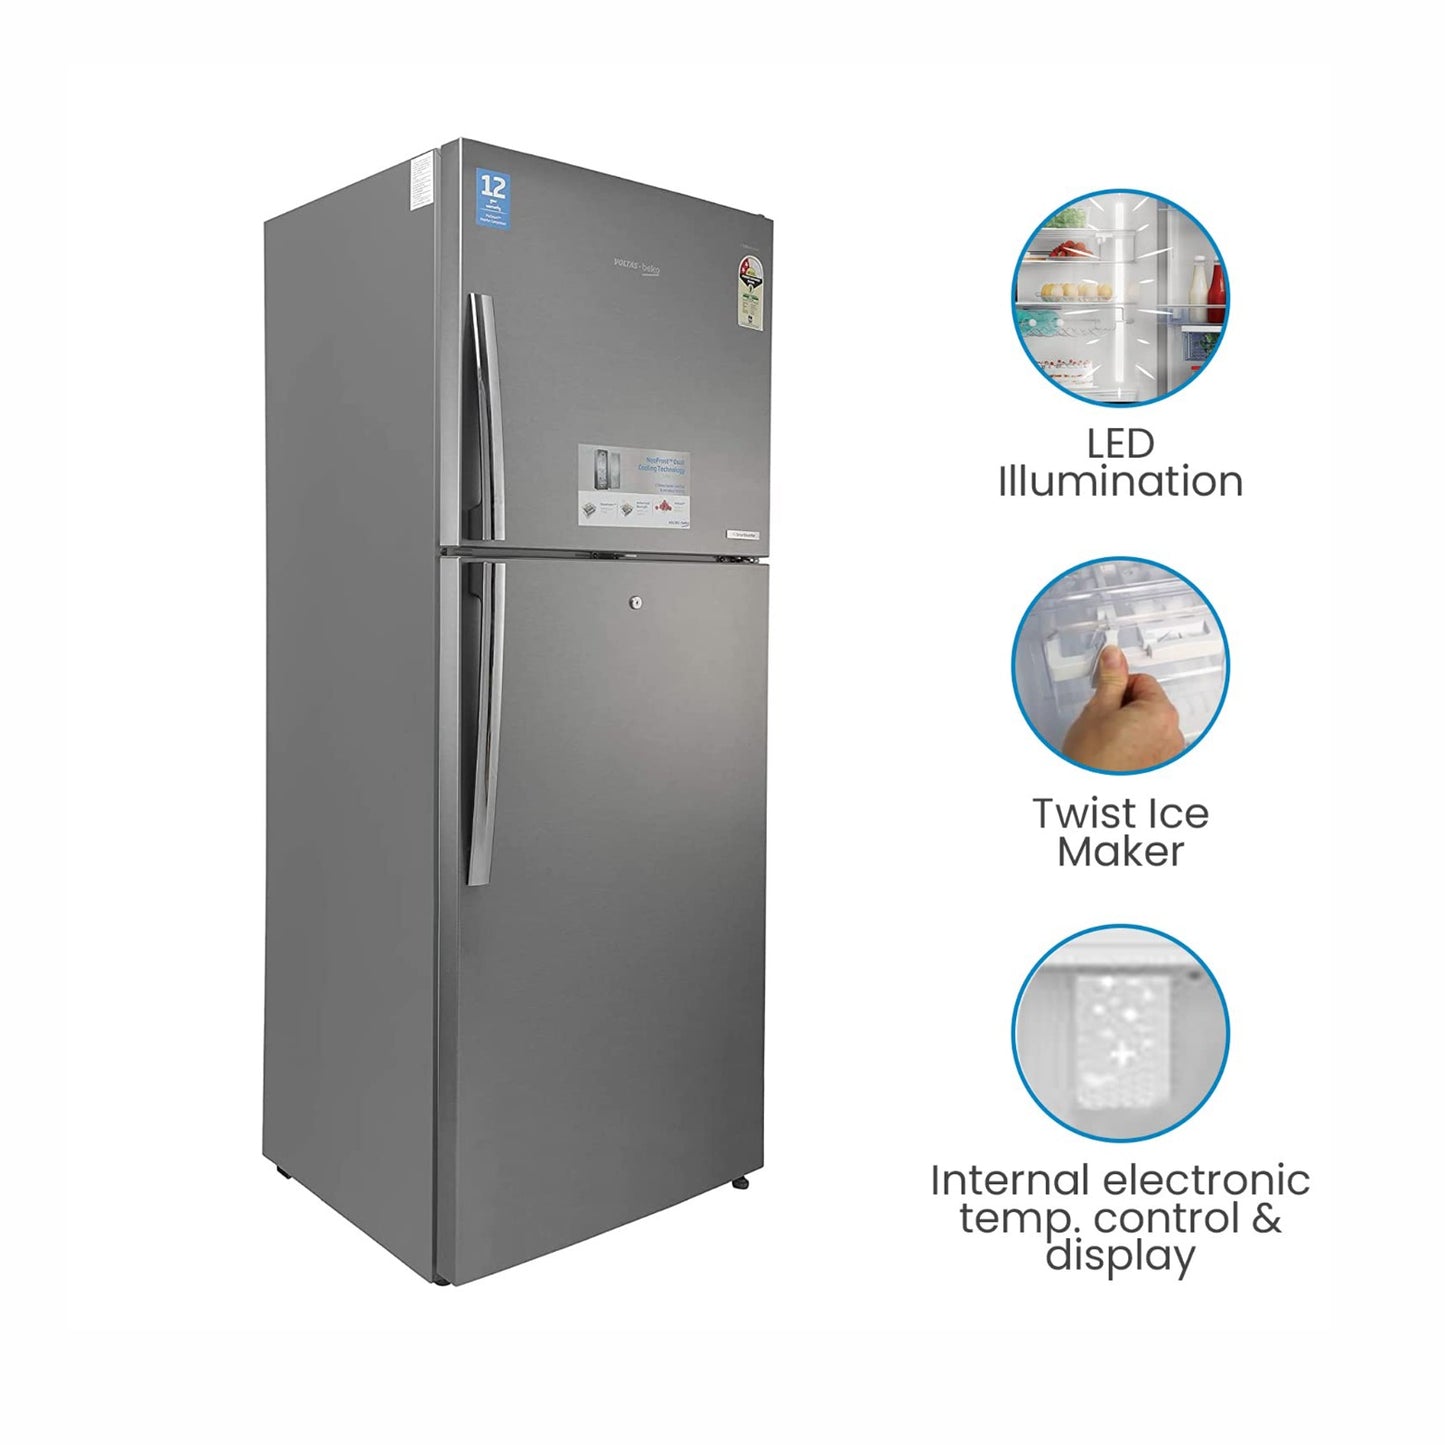 Beko 463L Frost Free Inverter Refrigerator, RFF463IF